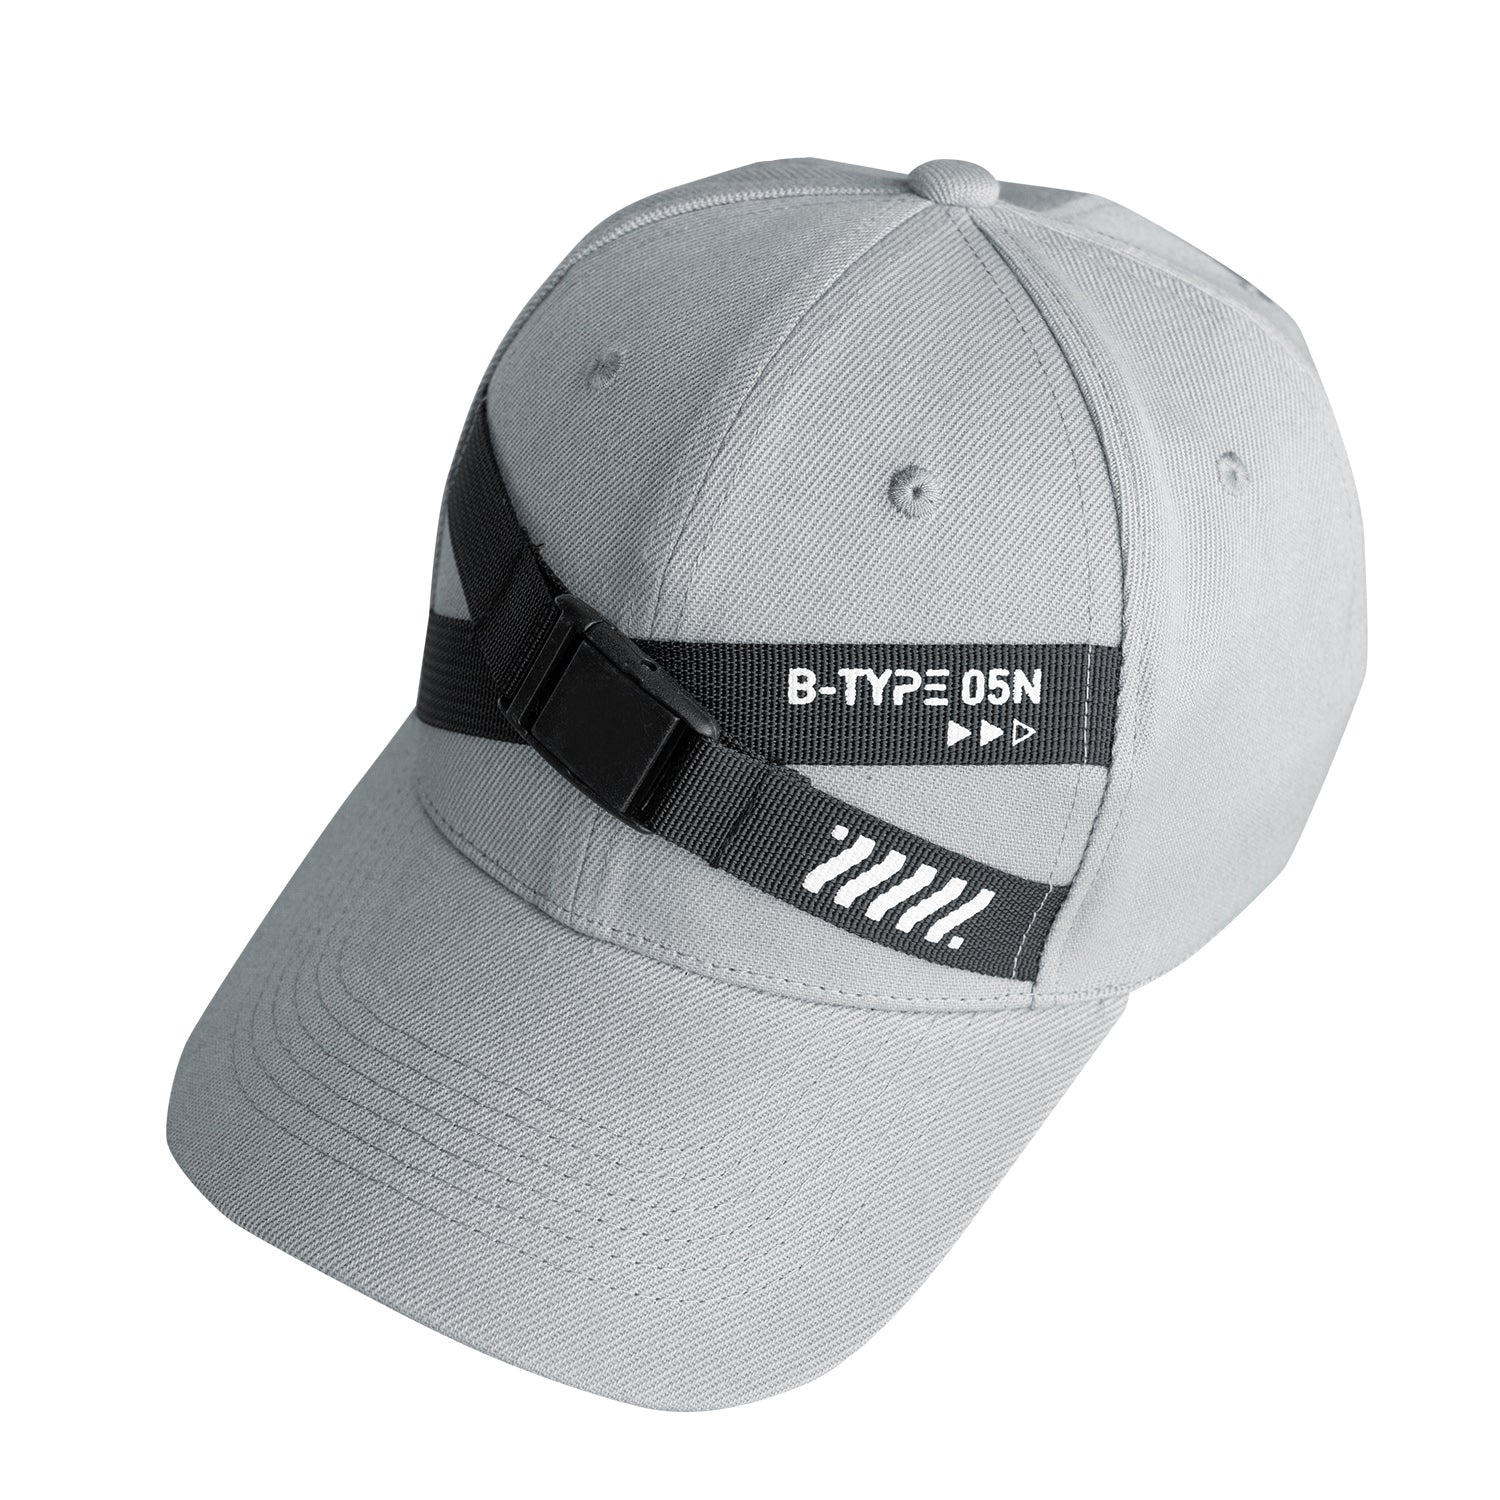 B-Type 05N Grey Baseball Cap